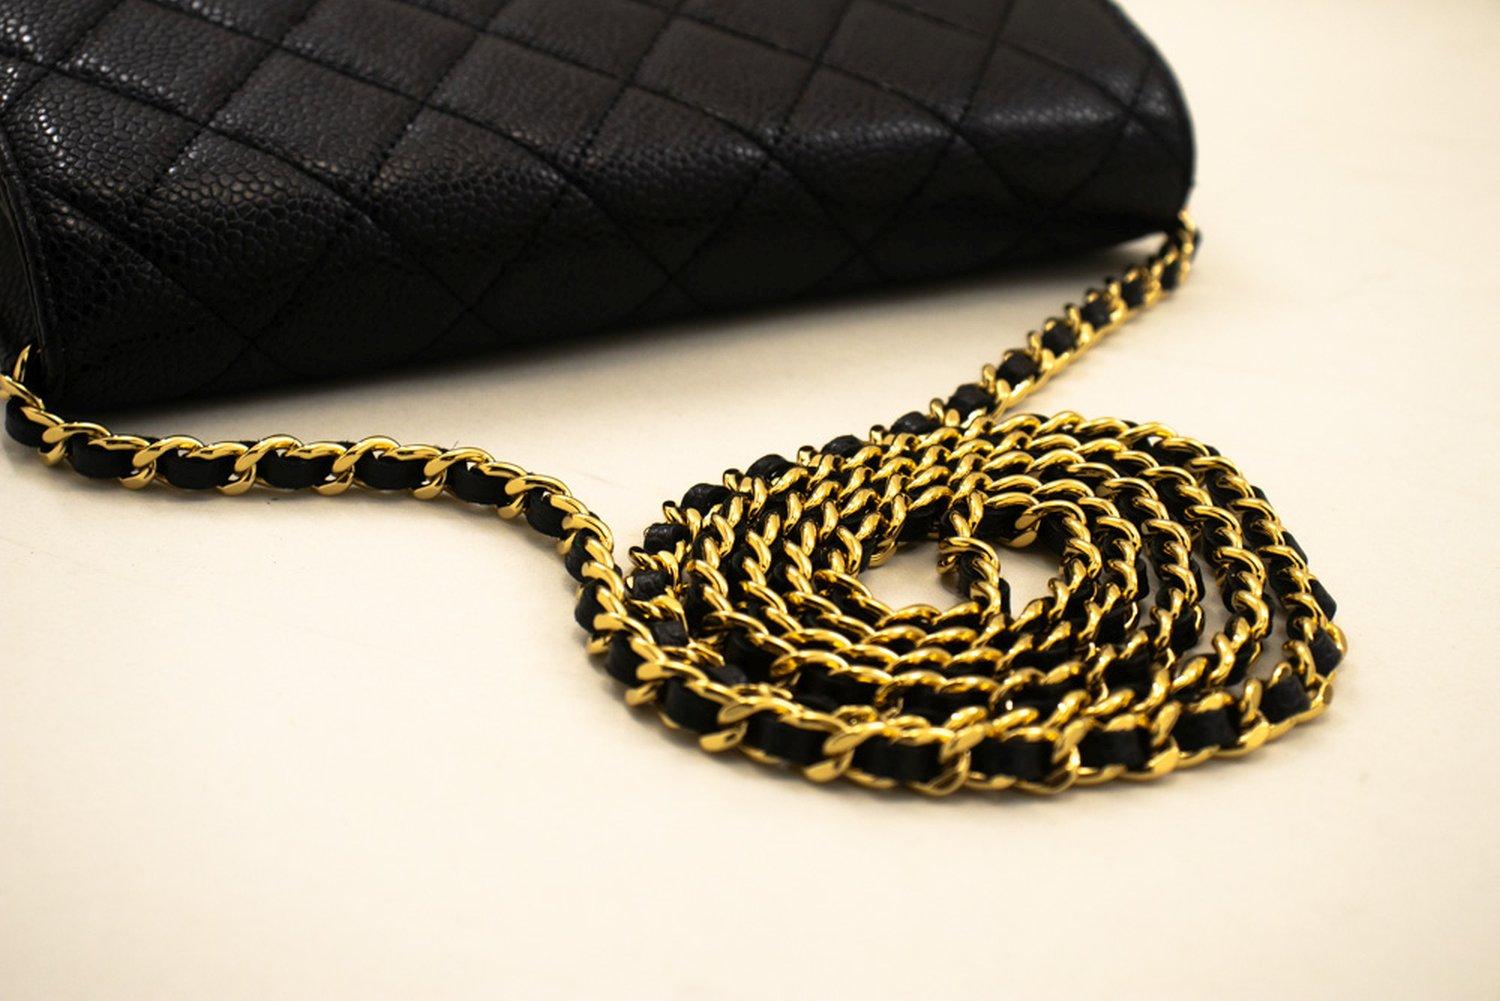 CHANEL Caviar WOC Wallet On Chain Black Shoulder Crossbody Bag 9